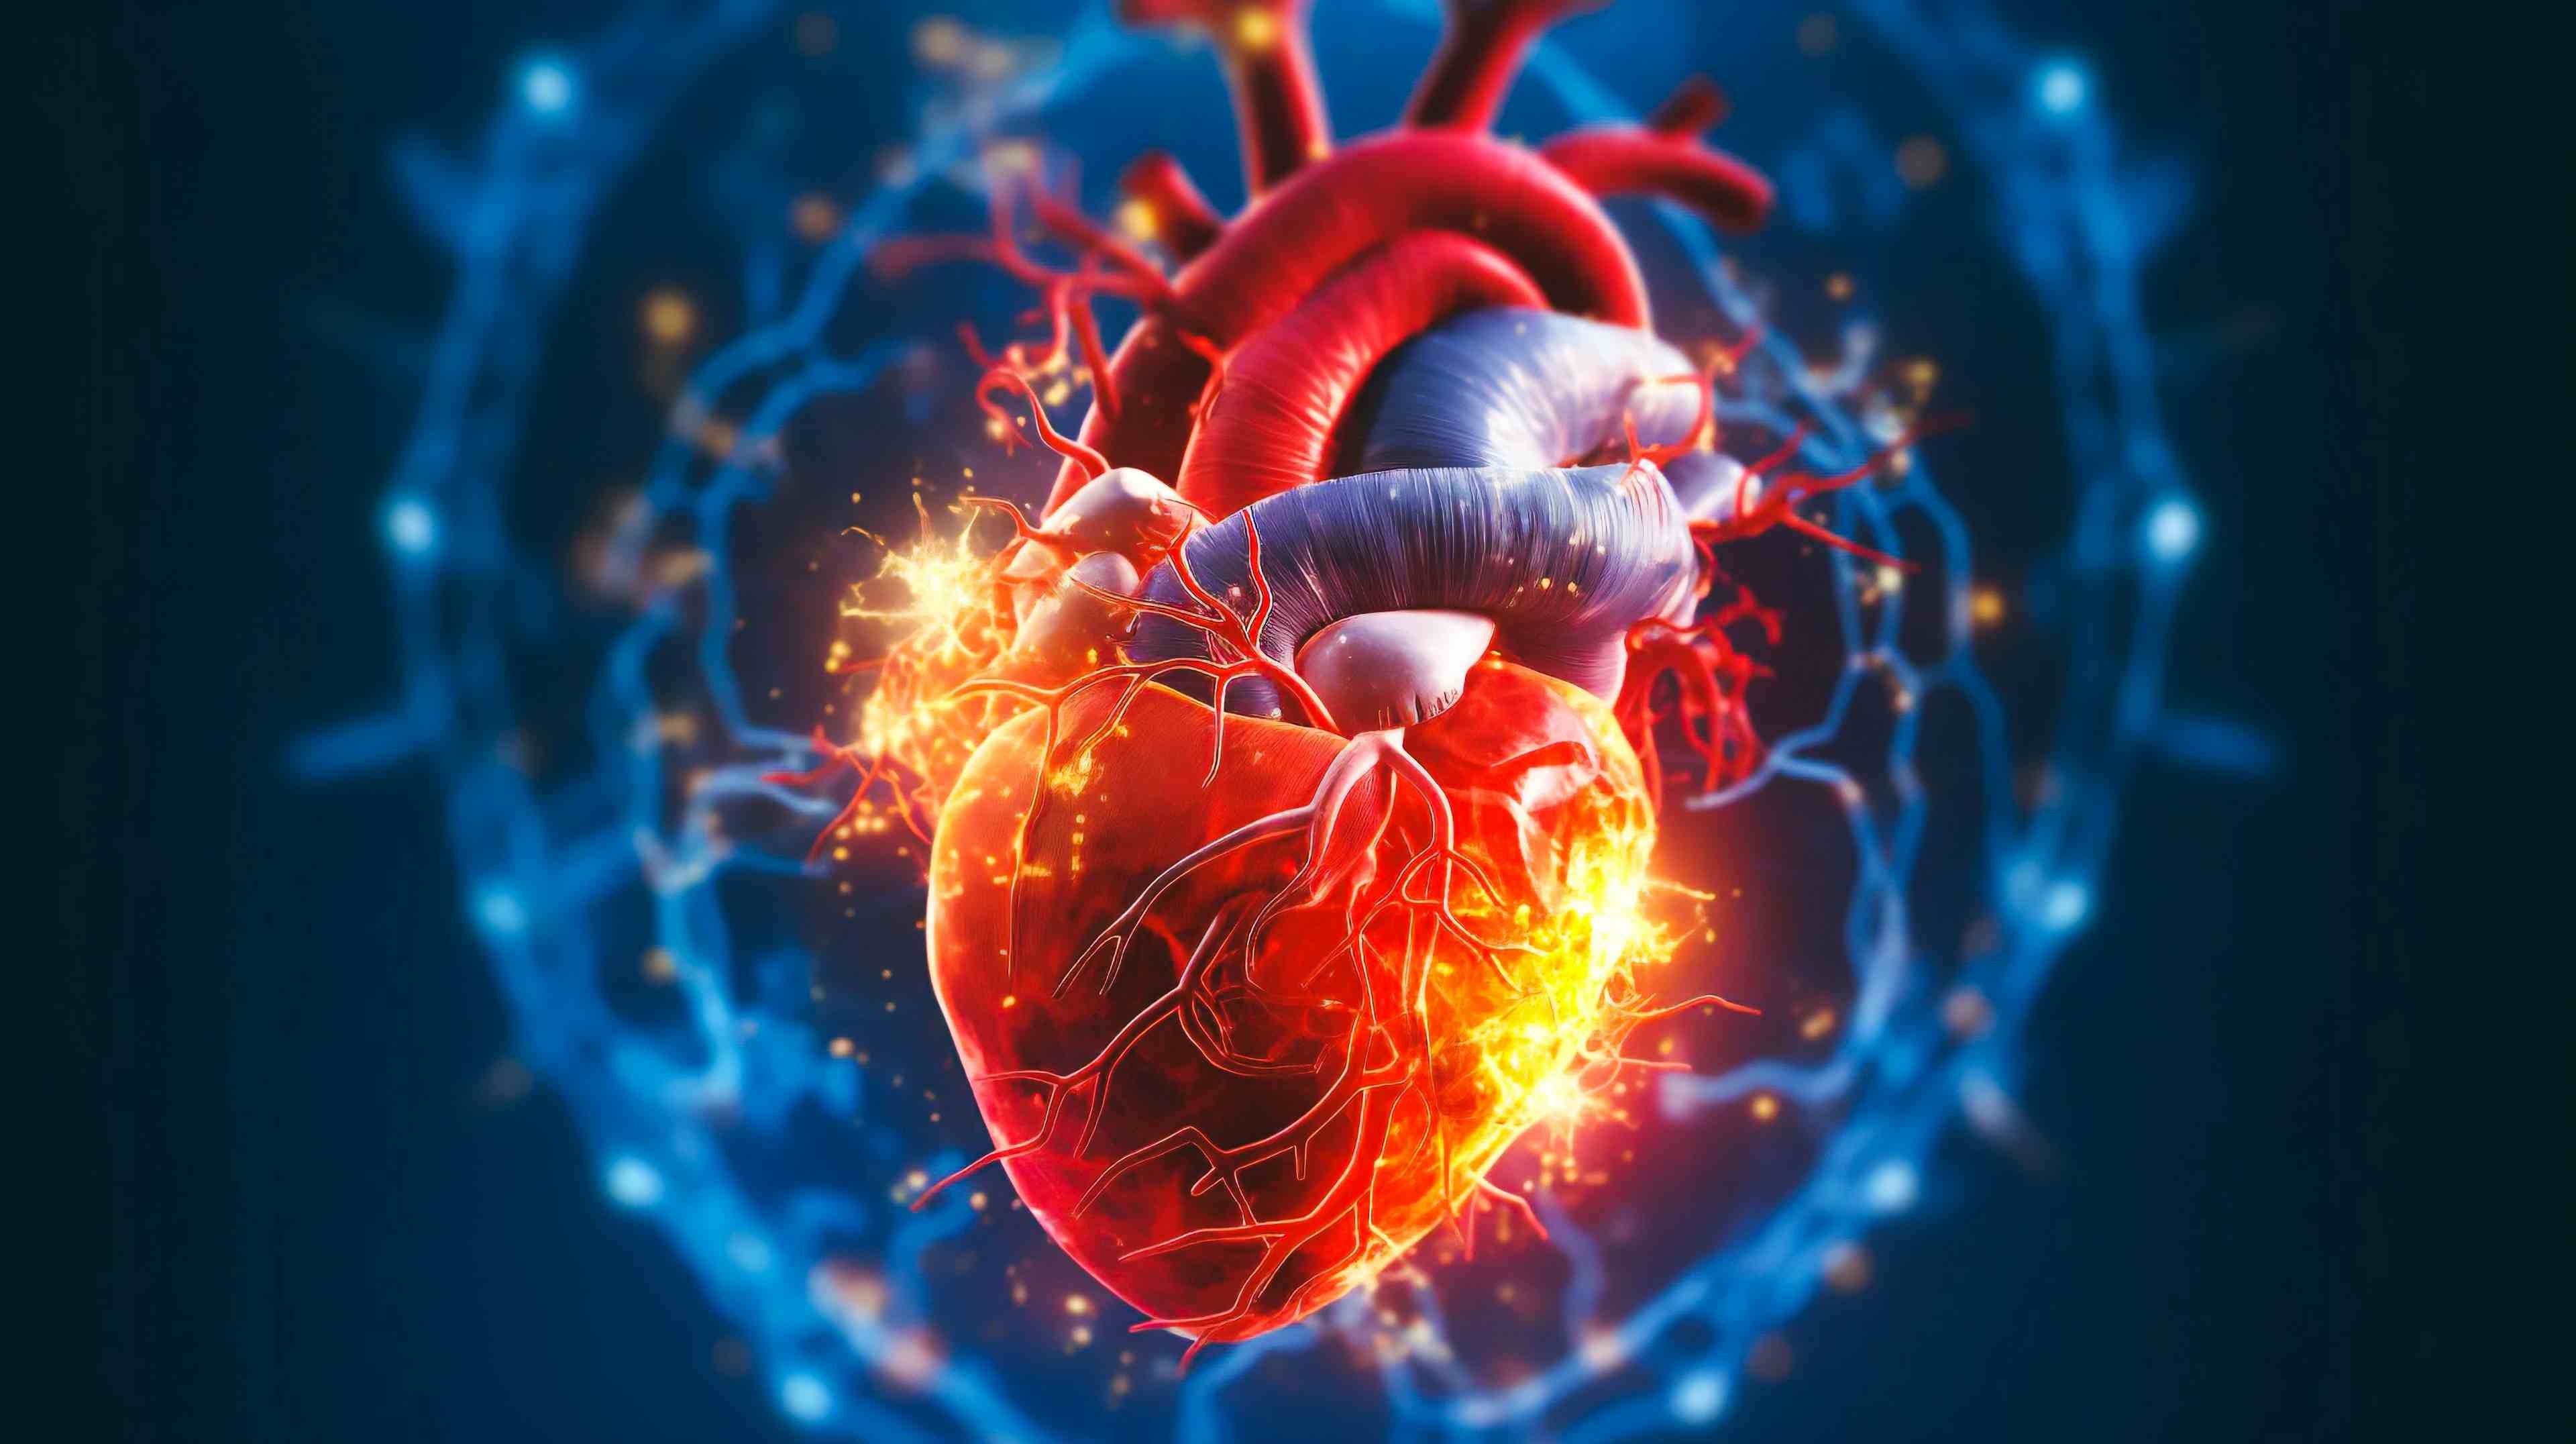 3D illustration of heart